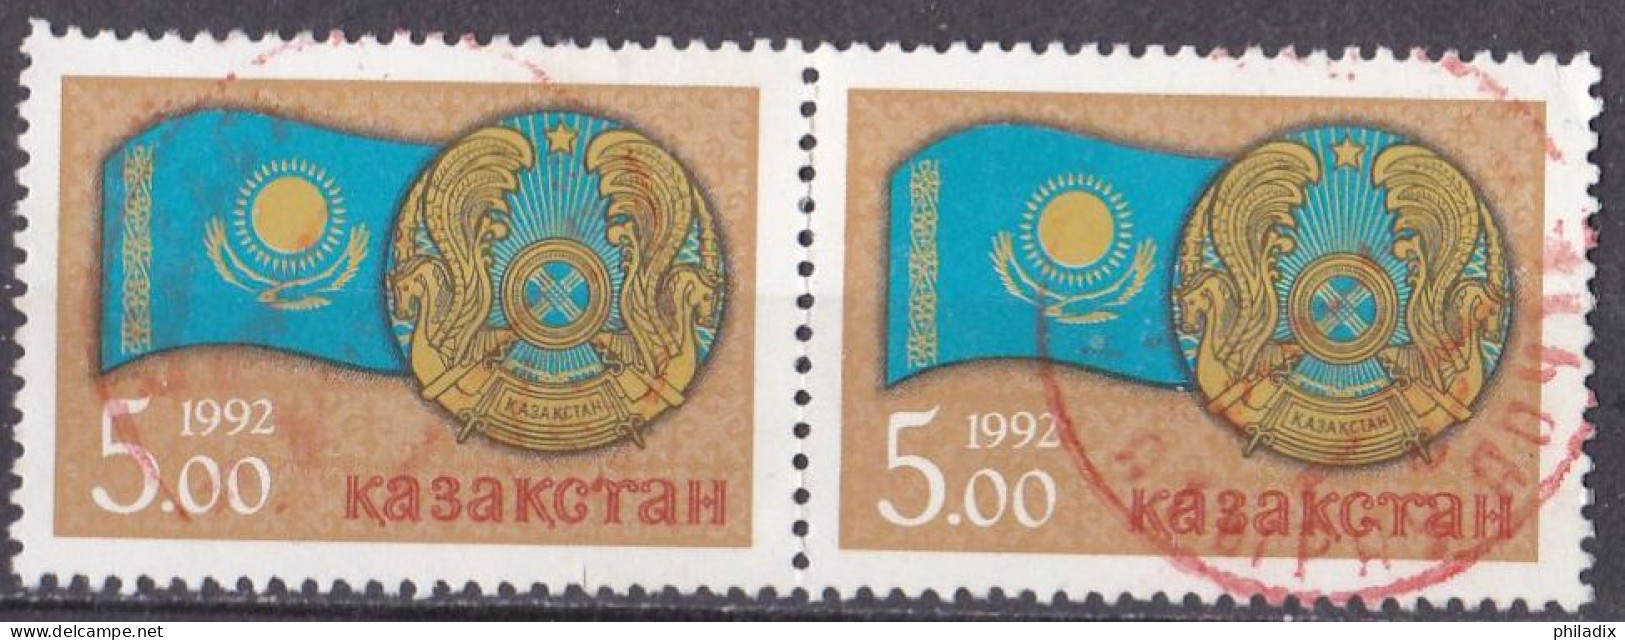 Kasachstan Marke Von 1992 O/used (A5-13) - Kazakhstan